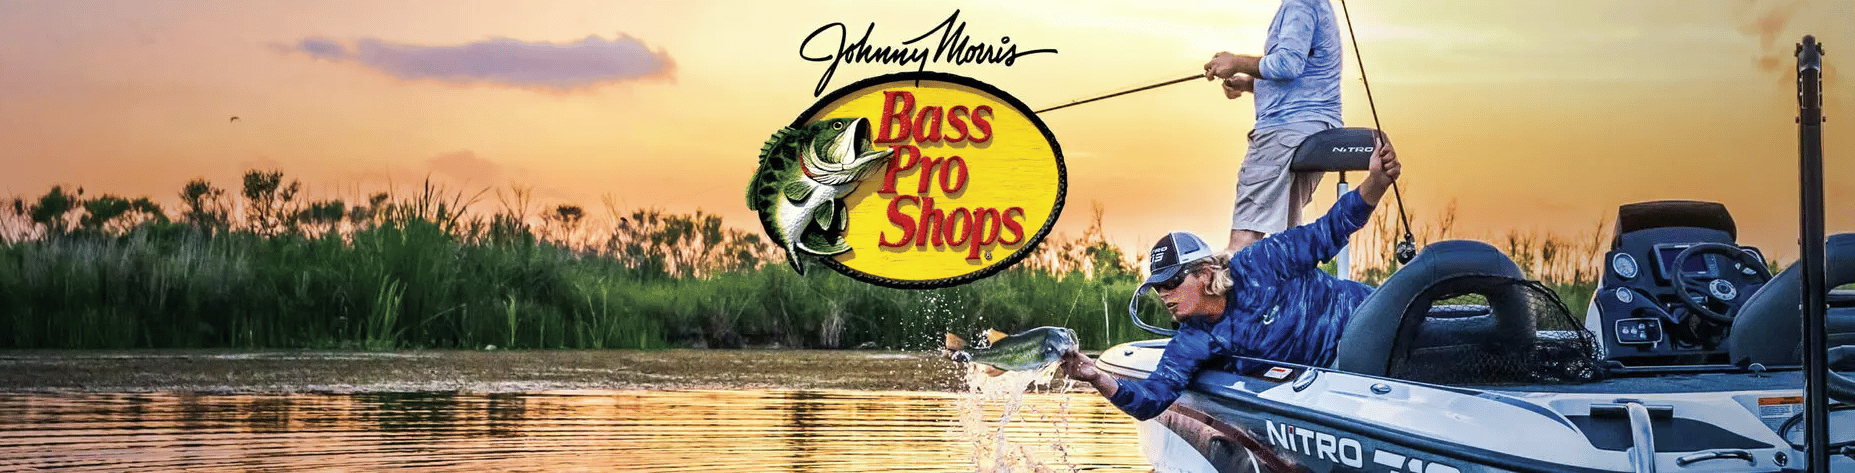 Bass Pro Shops Header Image - Boat with sunrise